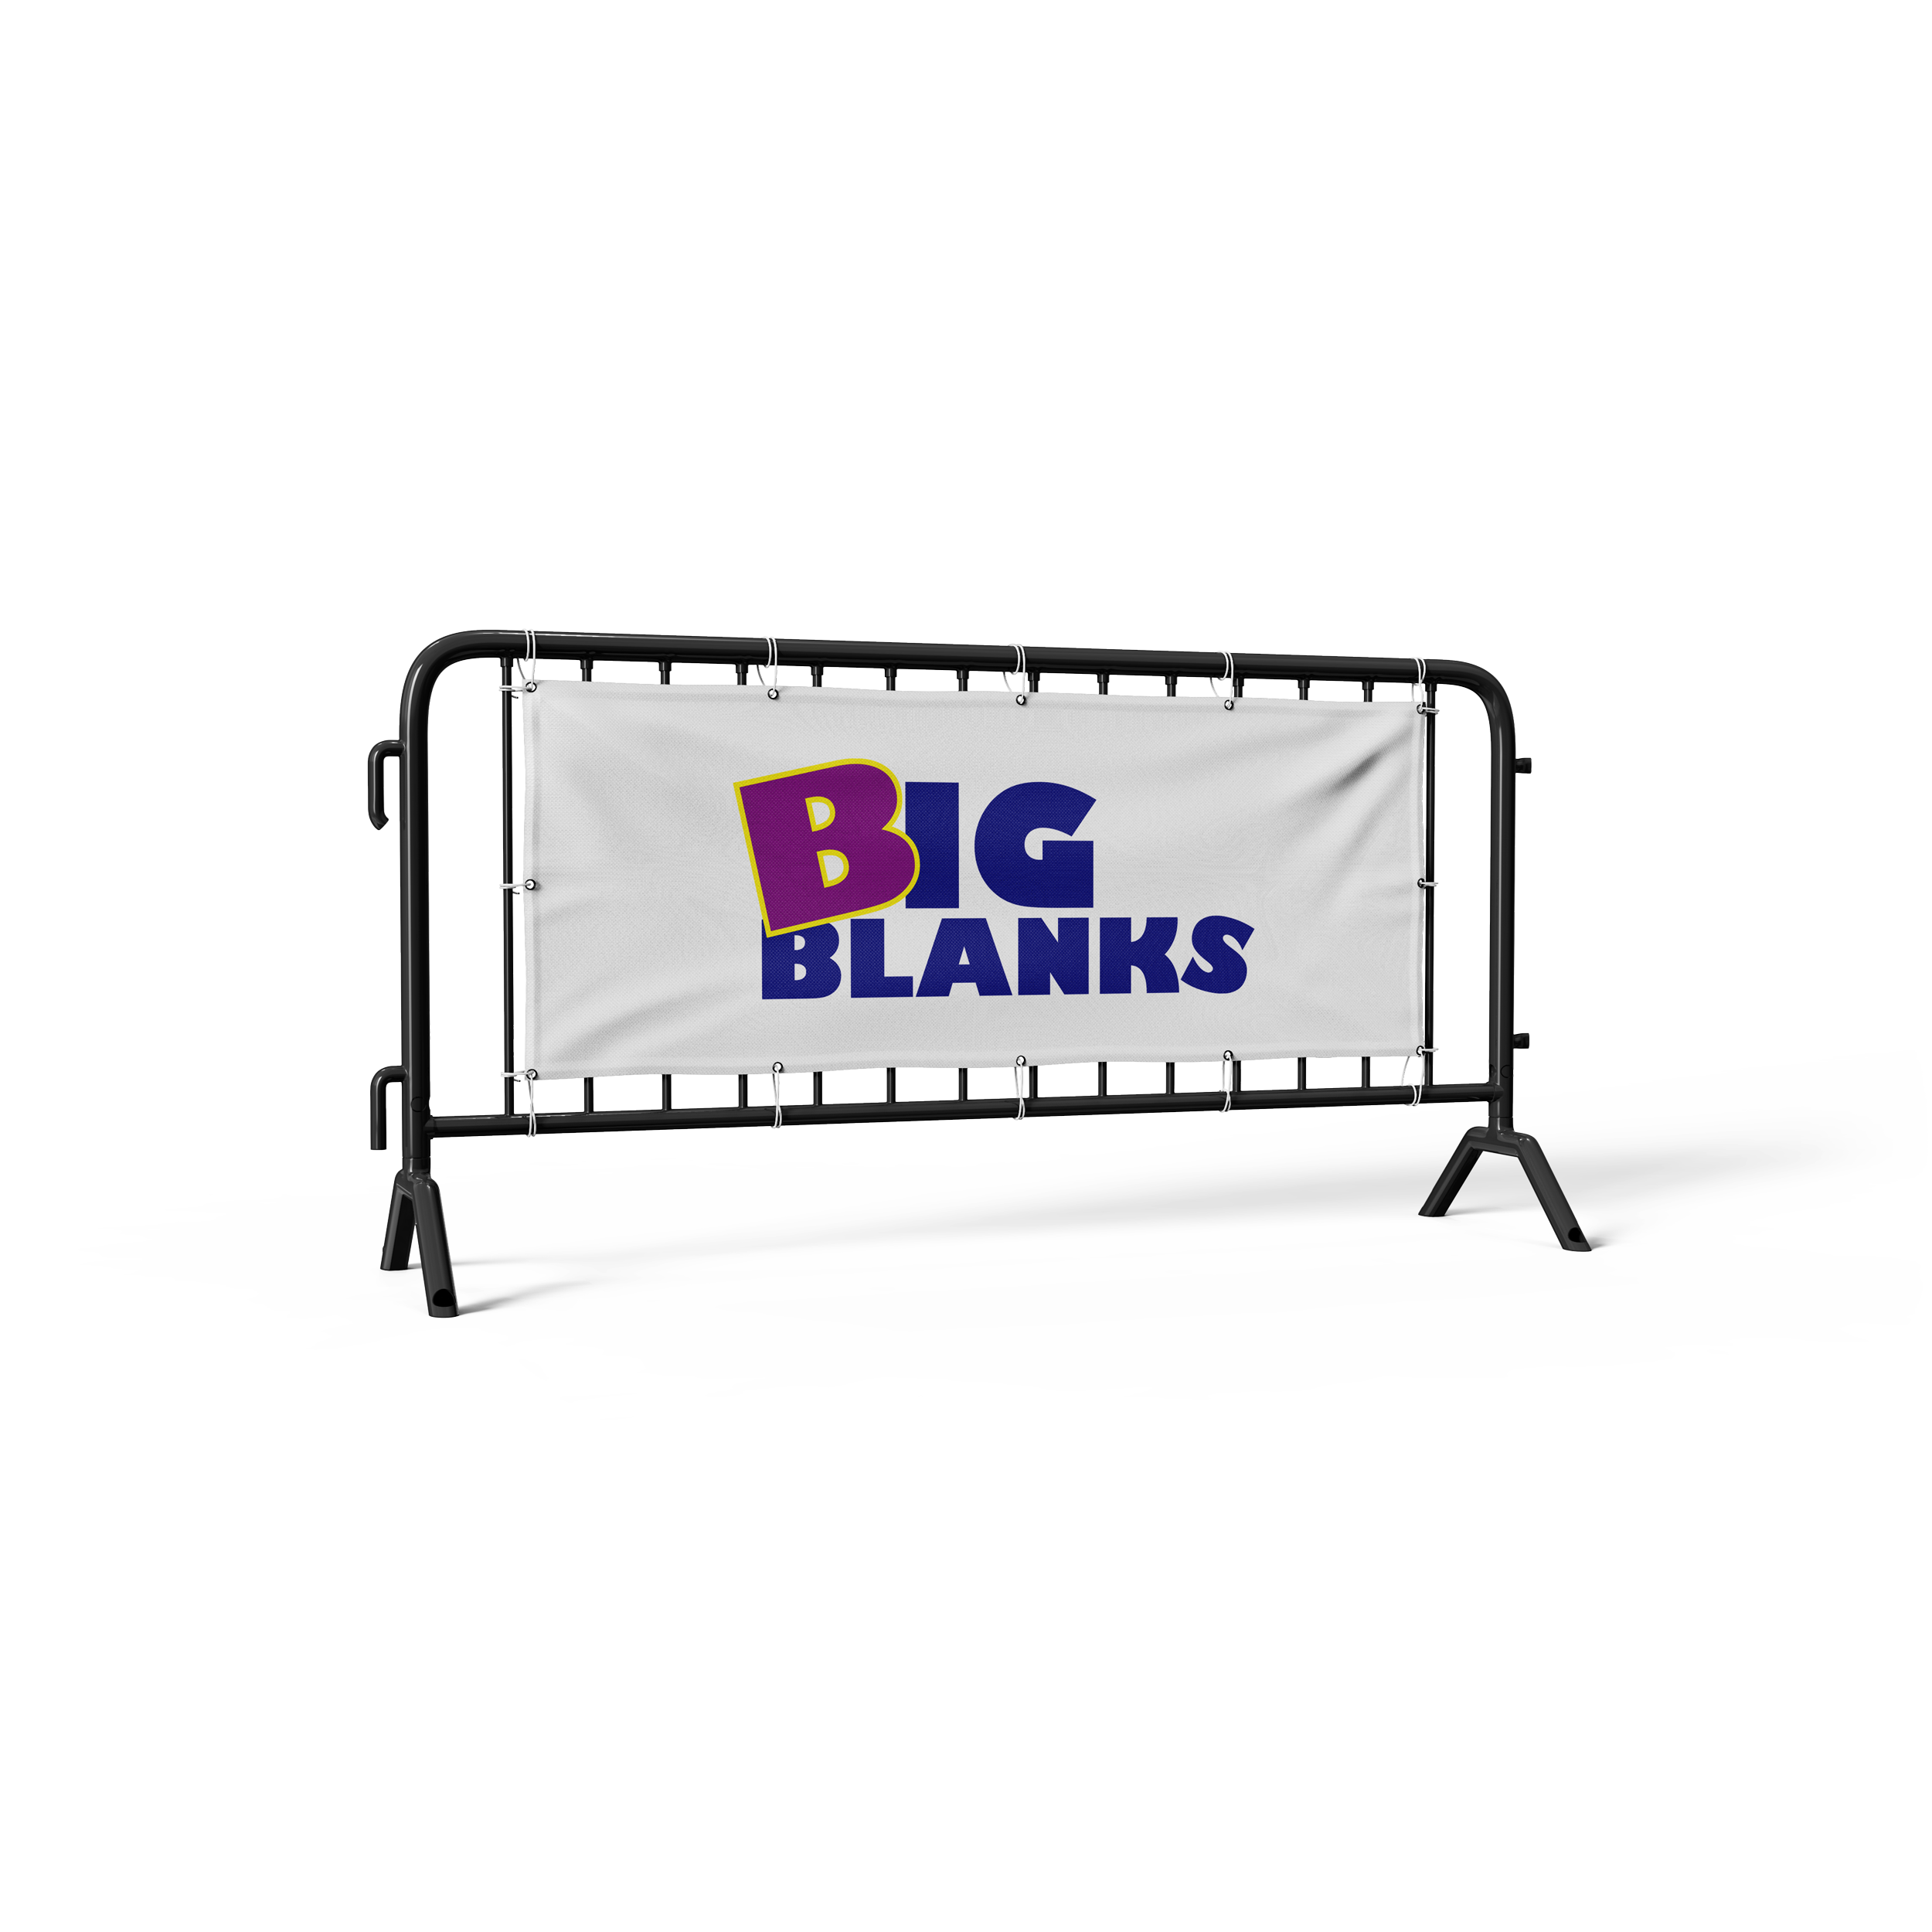 BigBlanks Custom Feather Flags - Standard